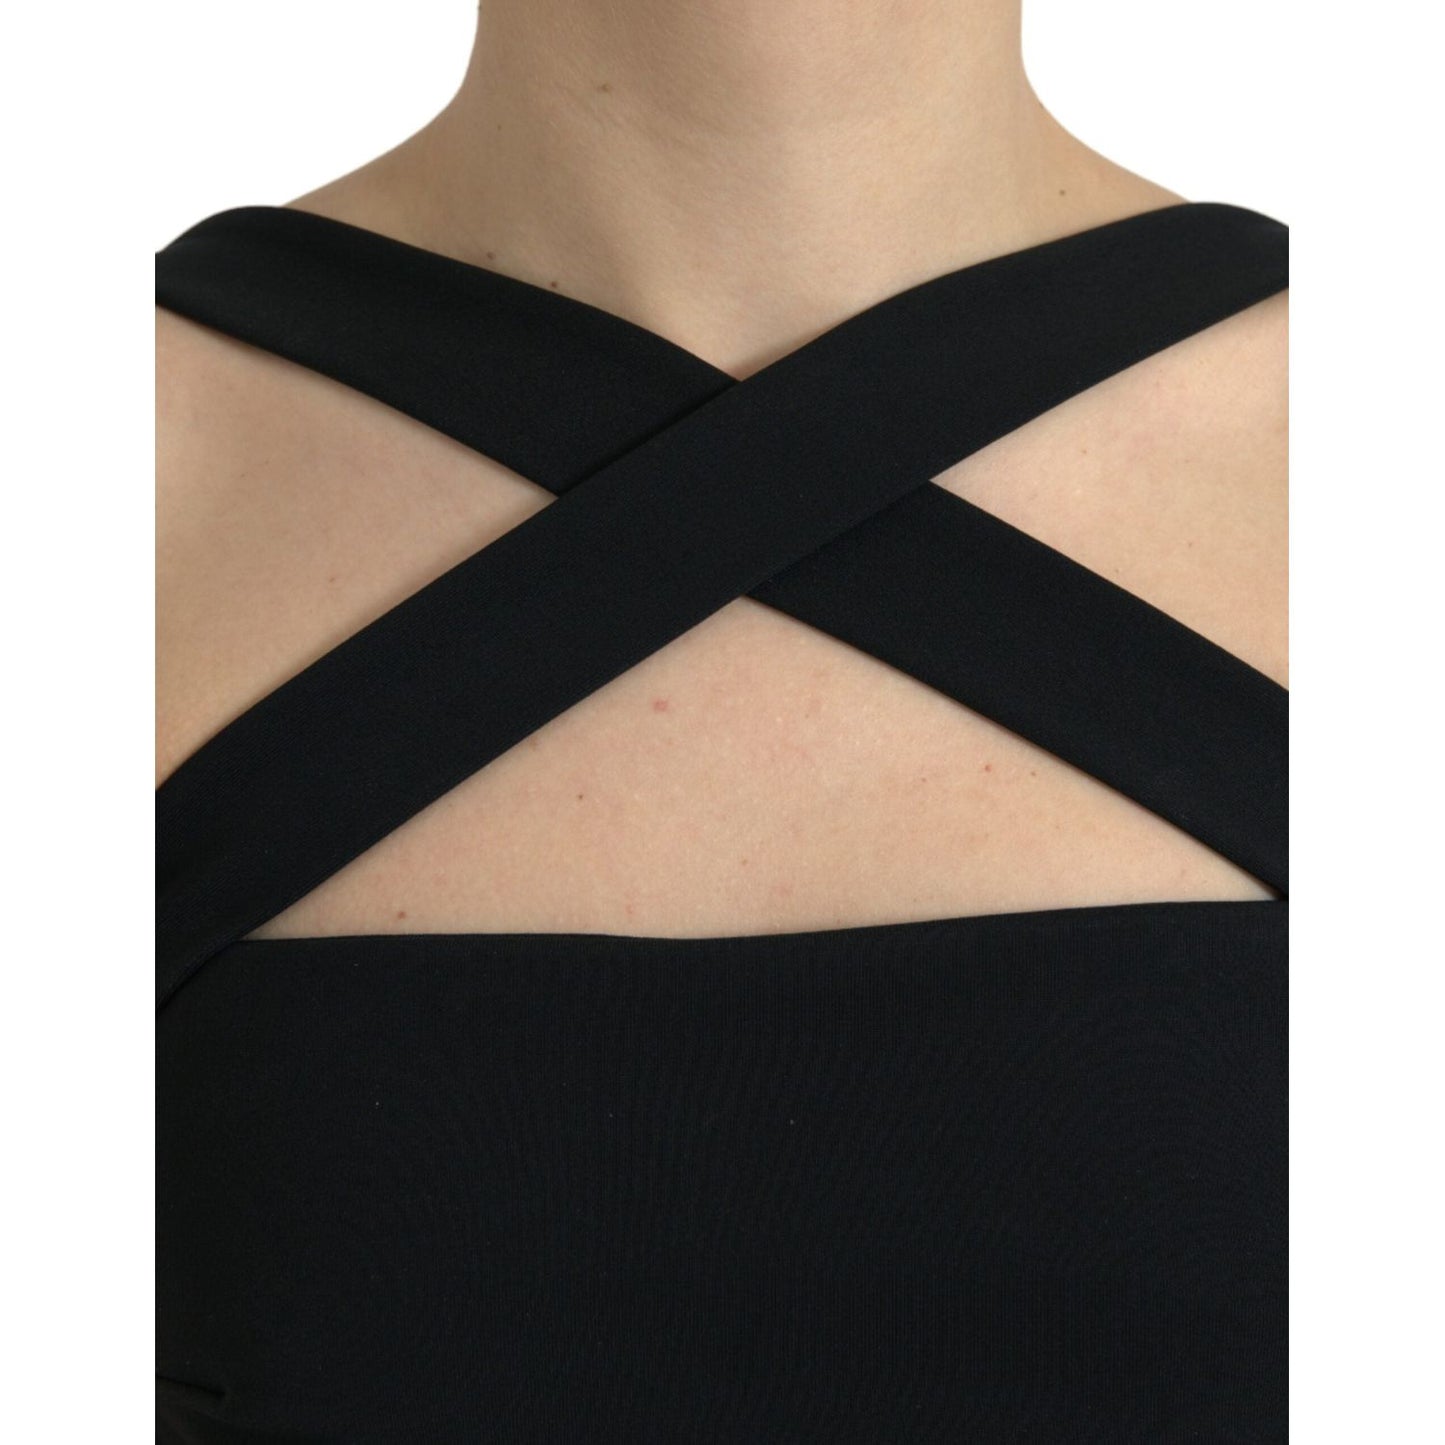 Dolce & Gabbana Elegant Black Sheath Halter Midi Dress elegant-black-sheath-halter-midi-dress